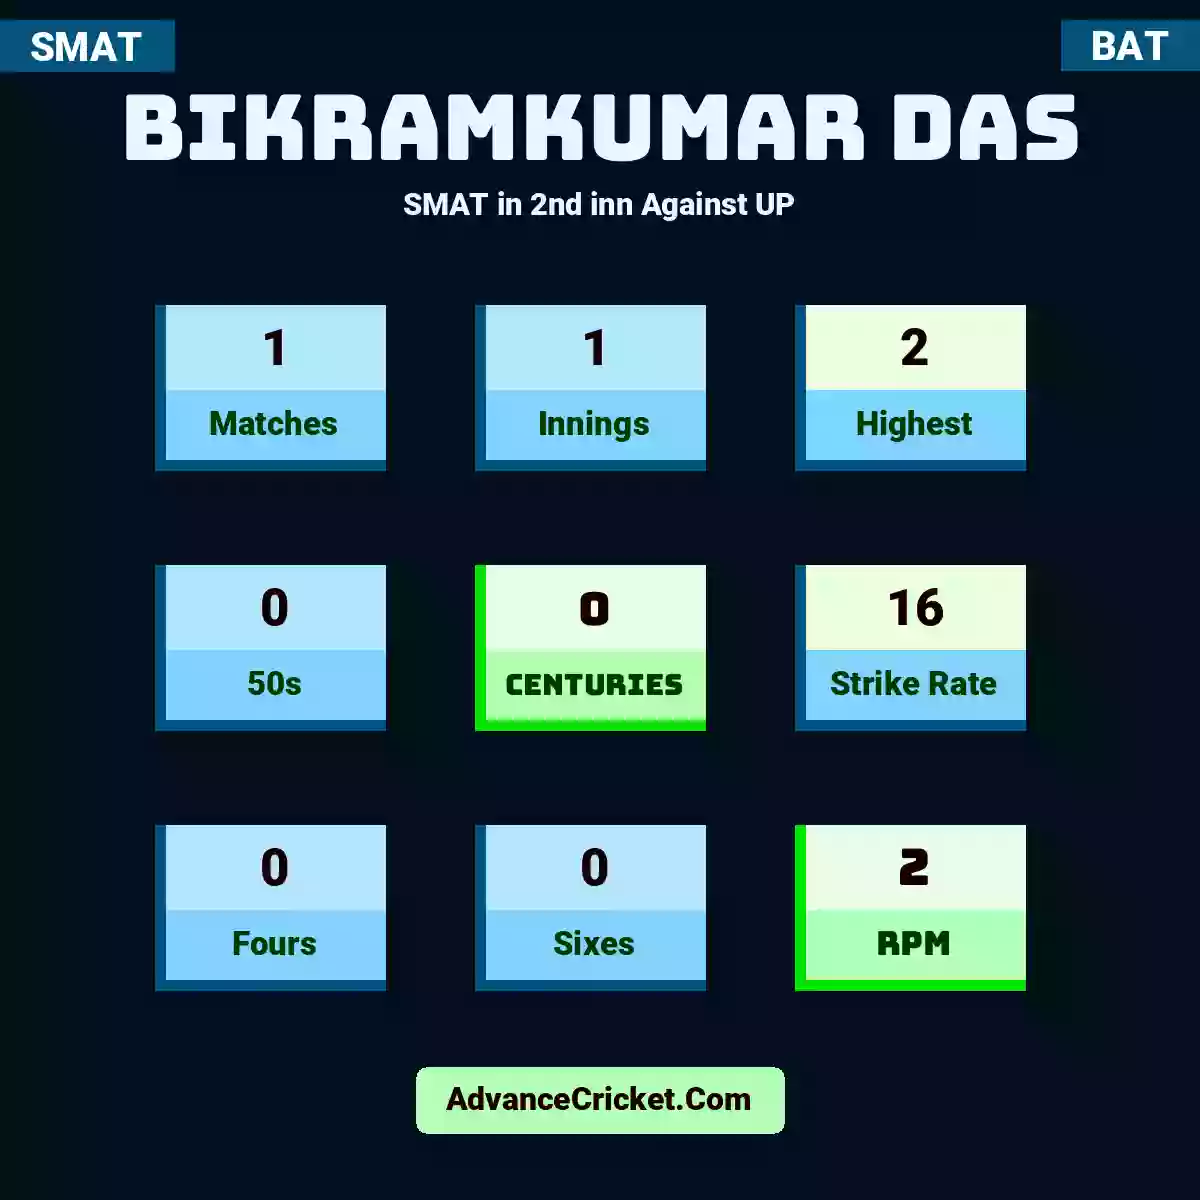 Bikramkumar Das SMAT  in 2nd inn Against UP, Bikramkumar Das played 1 matches, scored 2 runs as highest, 0 half-centuries, and 0 centuries, with a strike rate of 16. B.Das hit 0 fours and 0 sixes, with an RPM of 2.